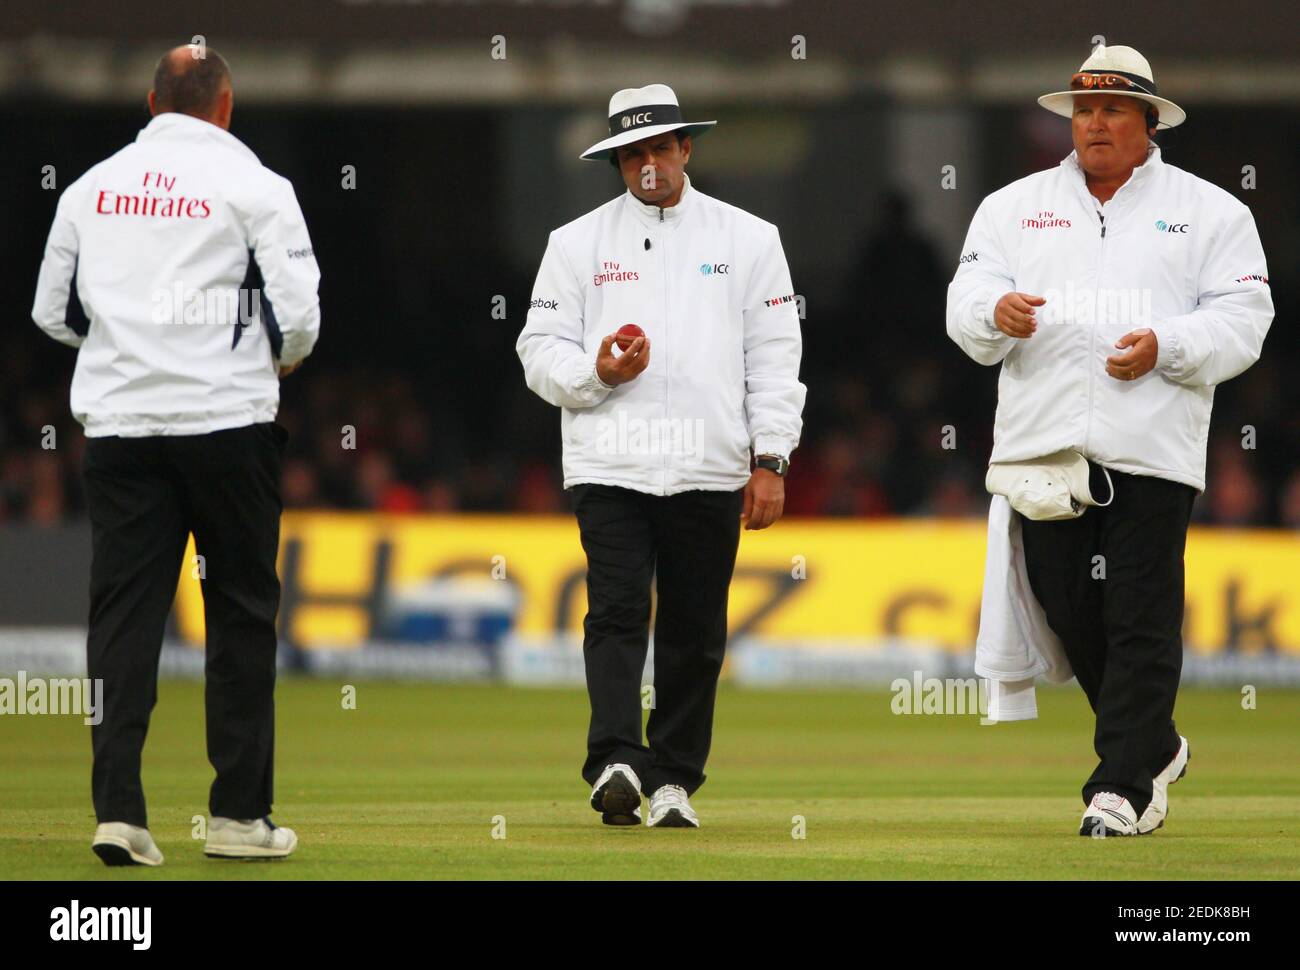 ND Sports 2012 Cricket Umpire Coat Traditional Umpiring Jacket Small 